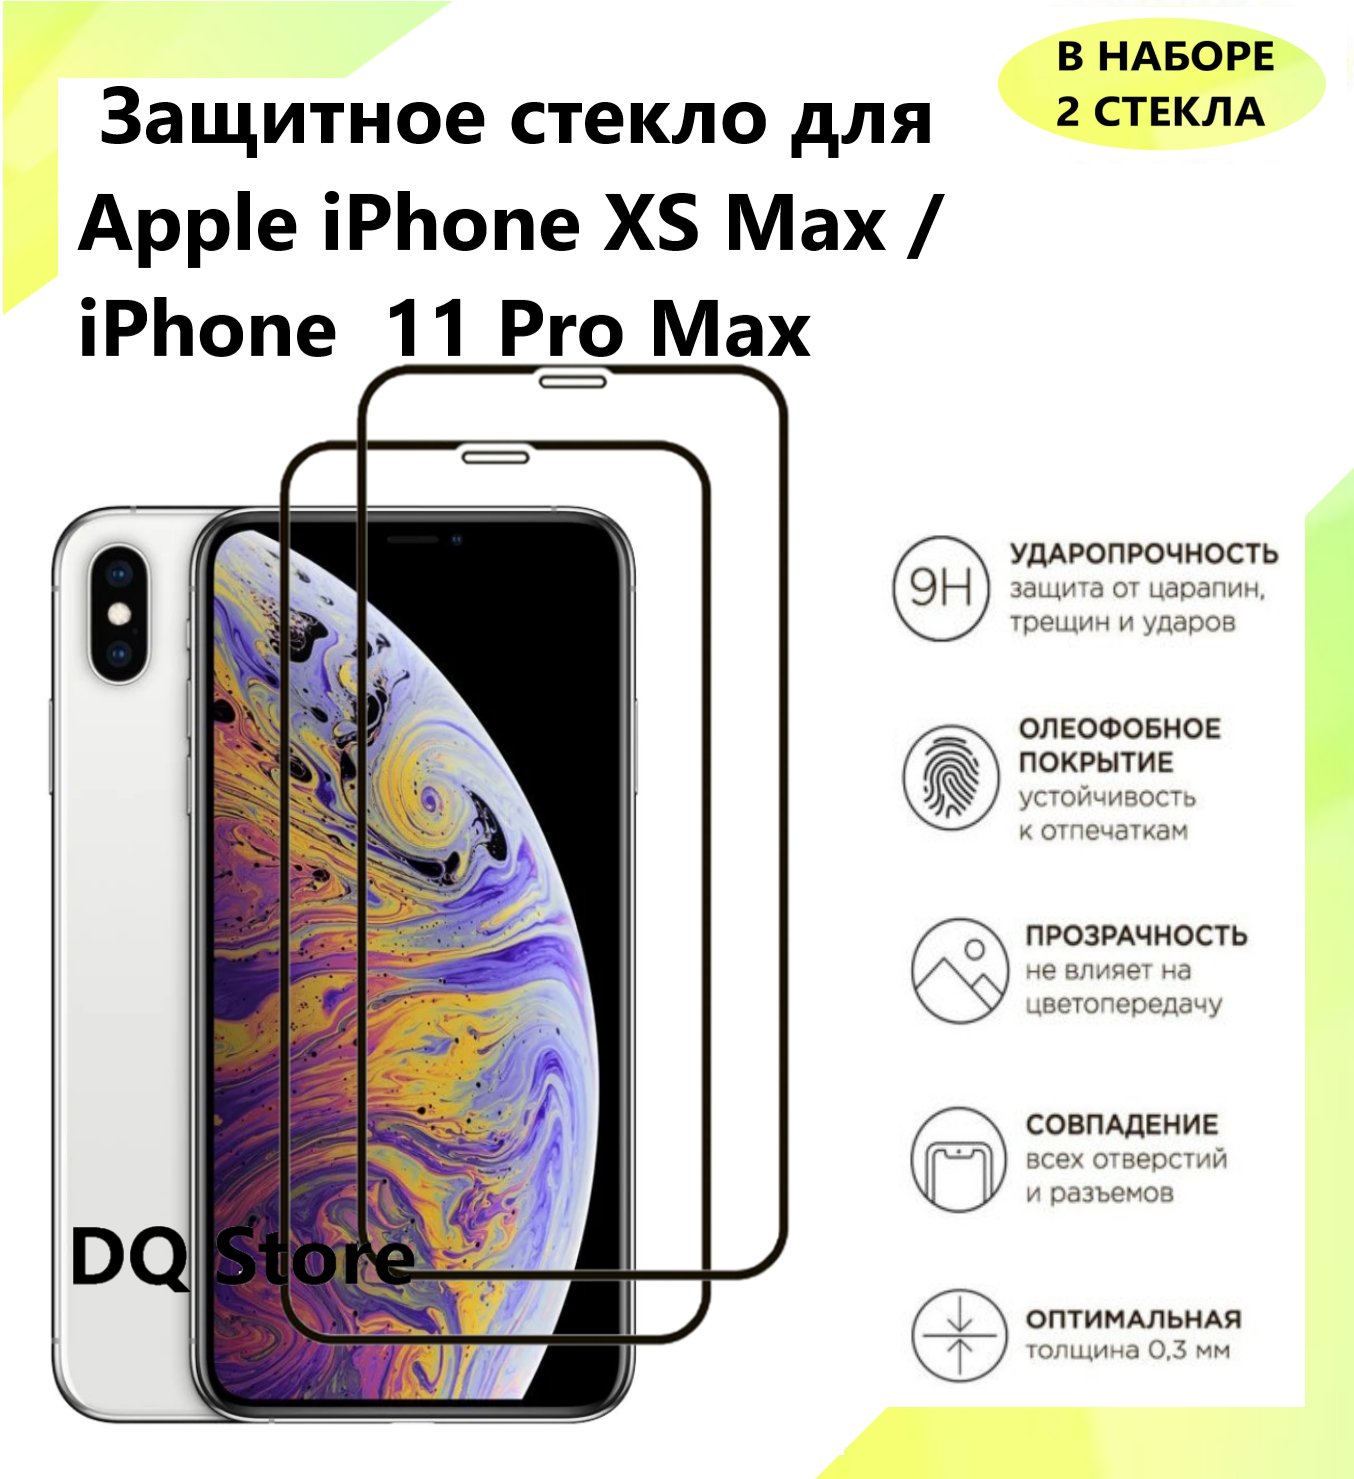 2 Защитных стекла на Apple iPhone XS Max / iPhone 11 Pro Max . Полноэкранные защитные стекла с олеофобным покрытием